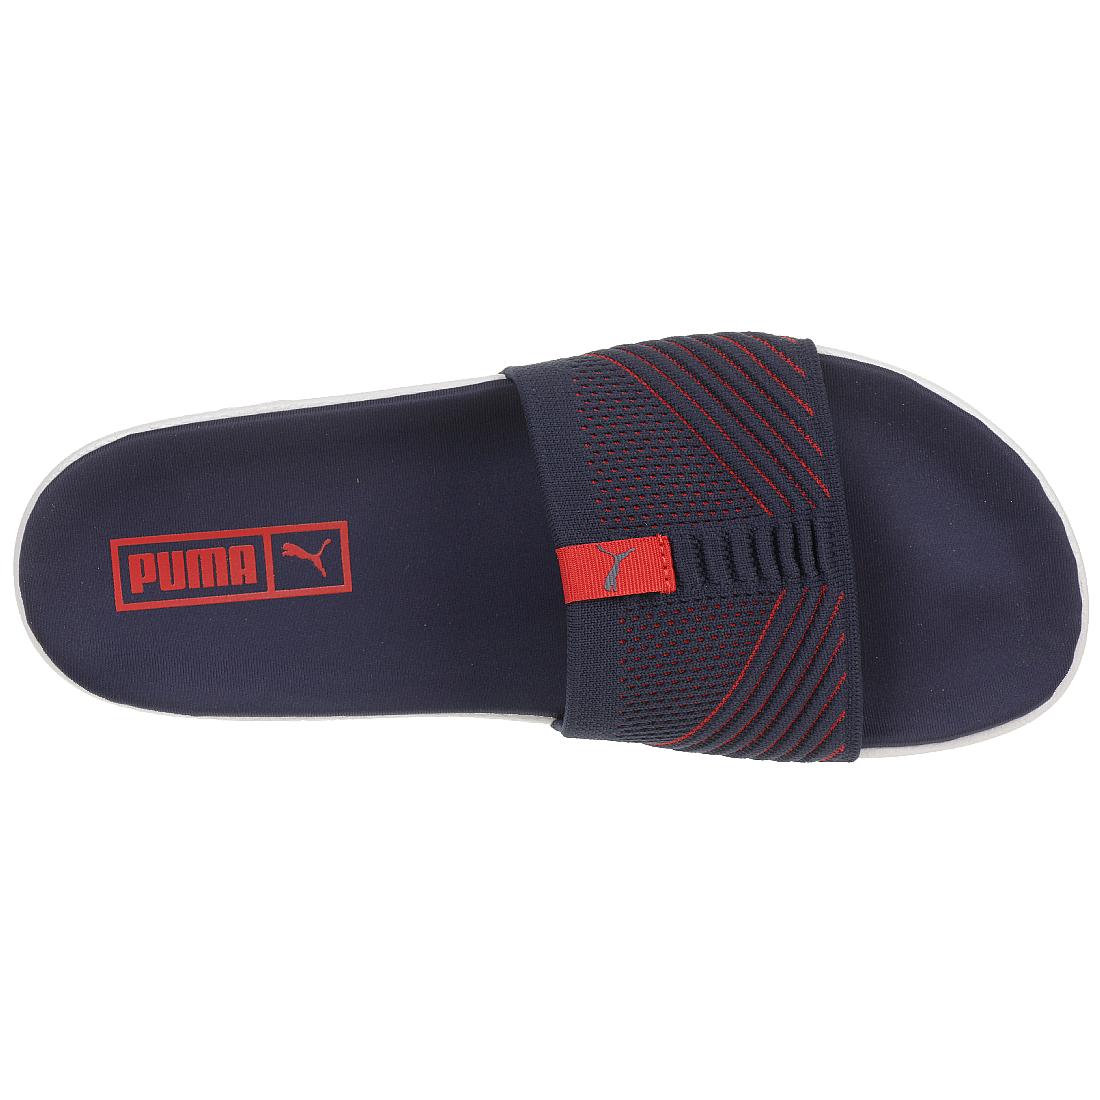 Puma Leadcat Knit Premium Unisex-Erwachsene Sandalen Badelatschen blau